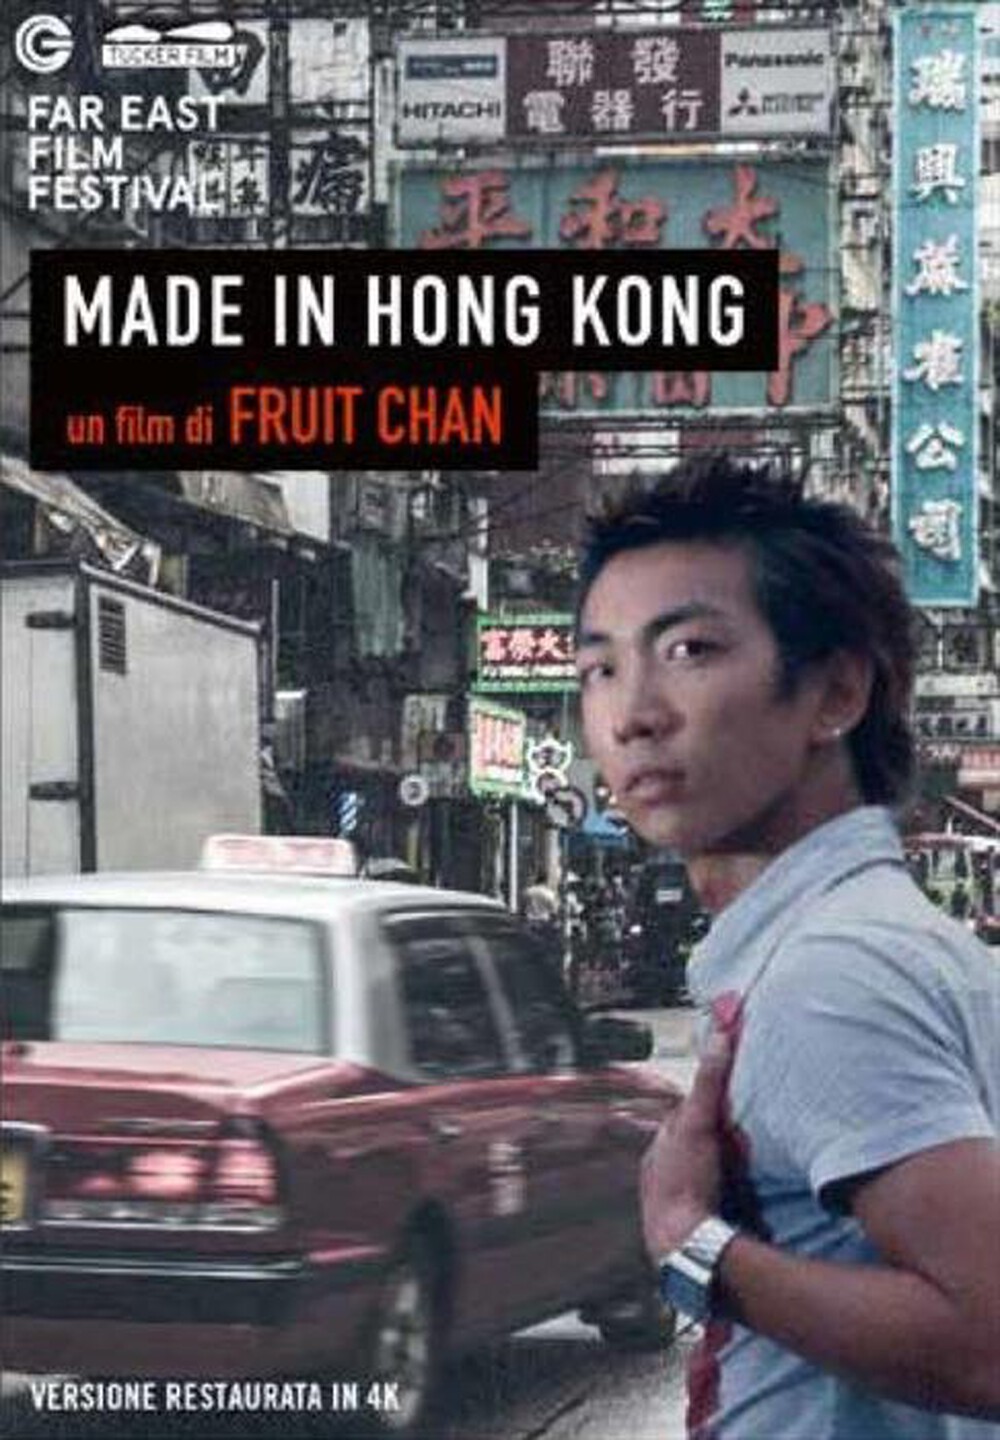 "TUCKER FILM - Made In Hong Kong"